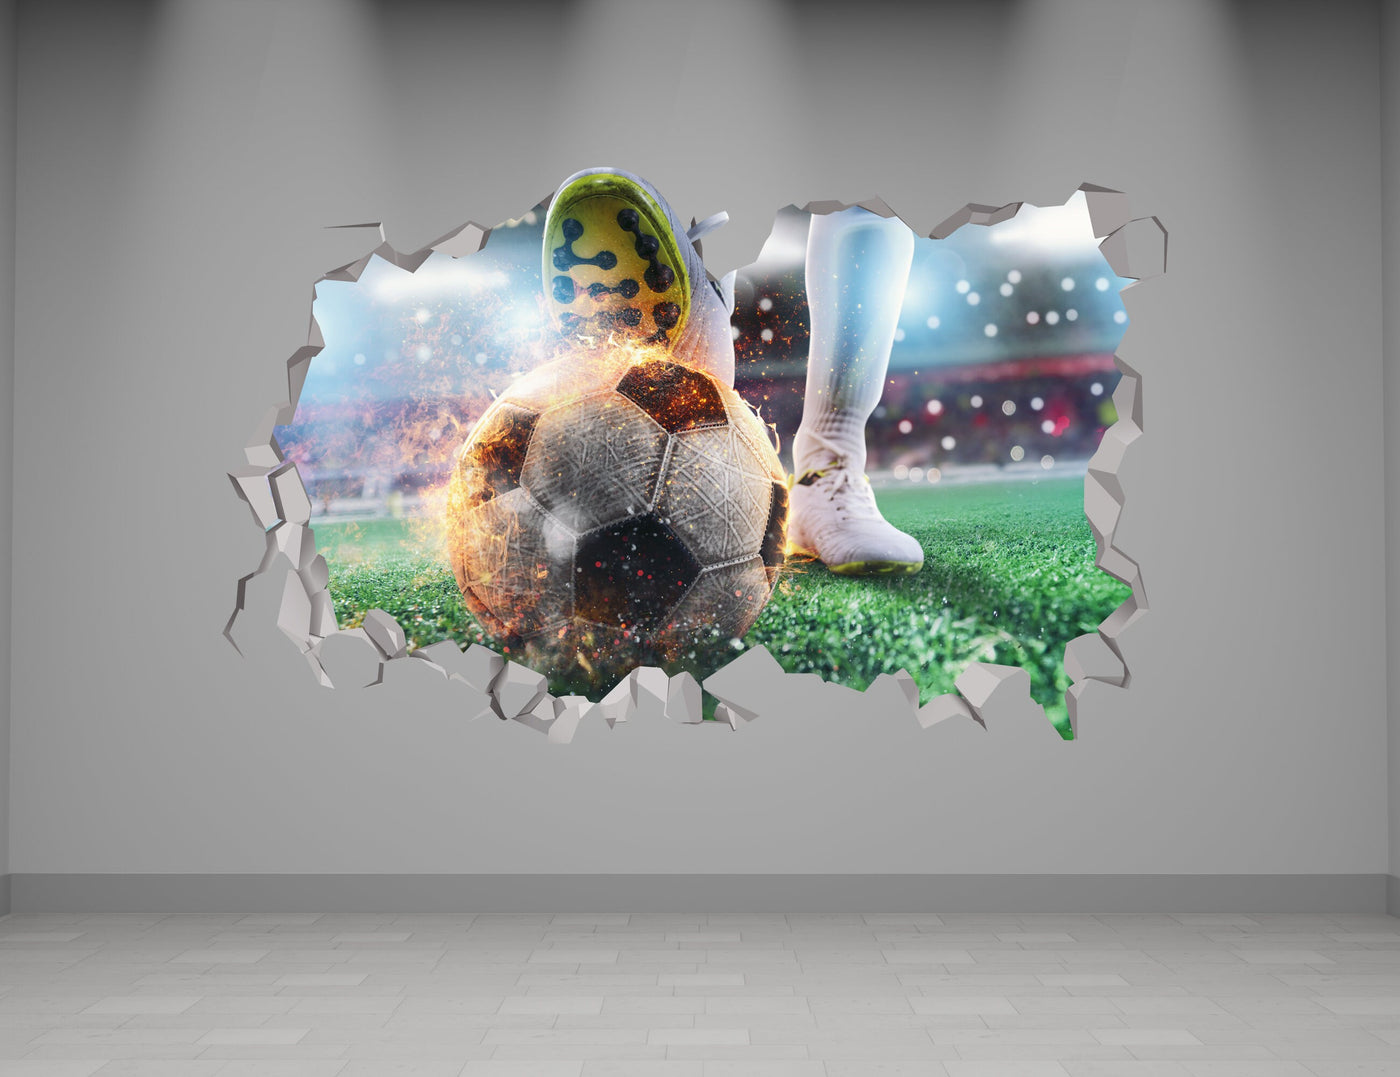 Soccer Wall Decor for Kids Room - Soccer Wall Decal - Soccer Wall Art - Soccer Gifts - Soccer Stickers - Soccer Goal Decal - Kids Decor